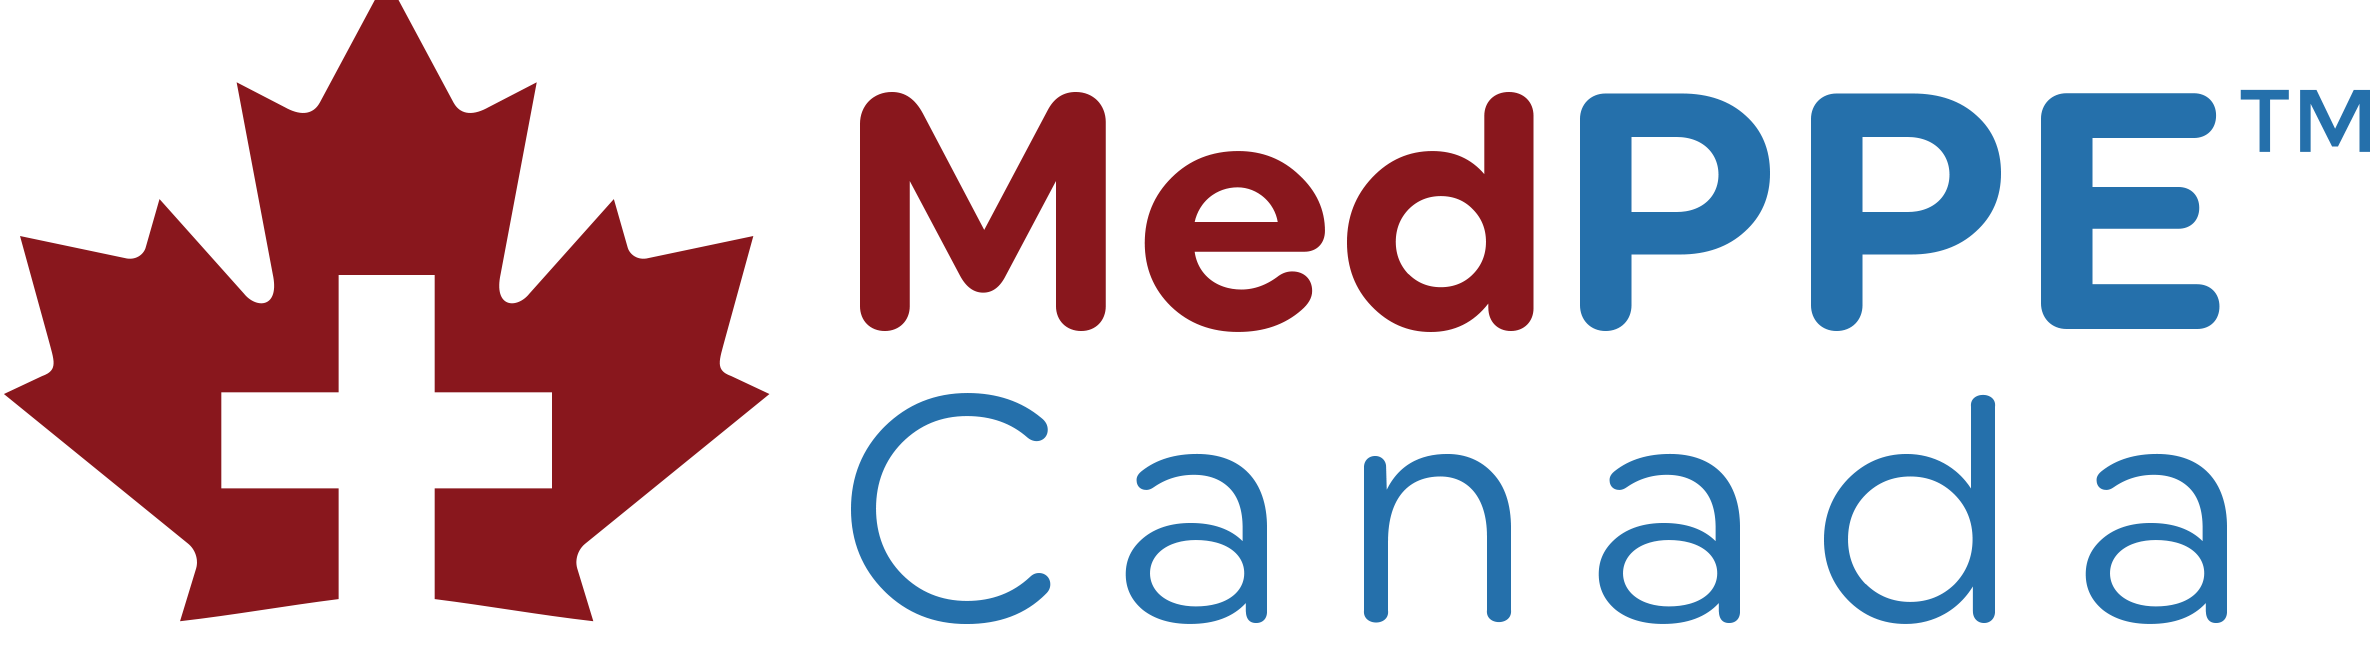 MedPPE Canada logo.png